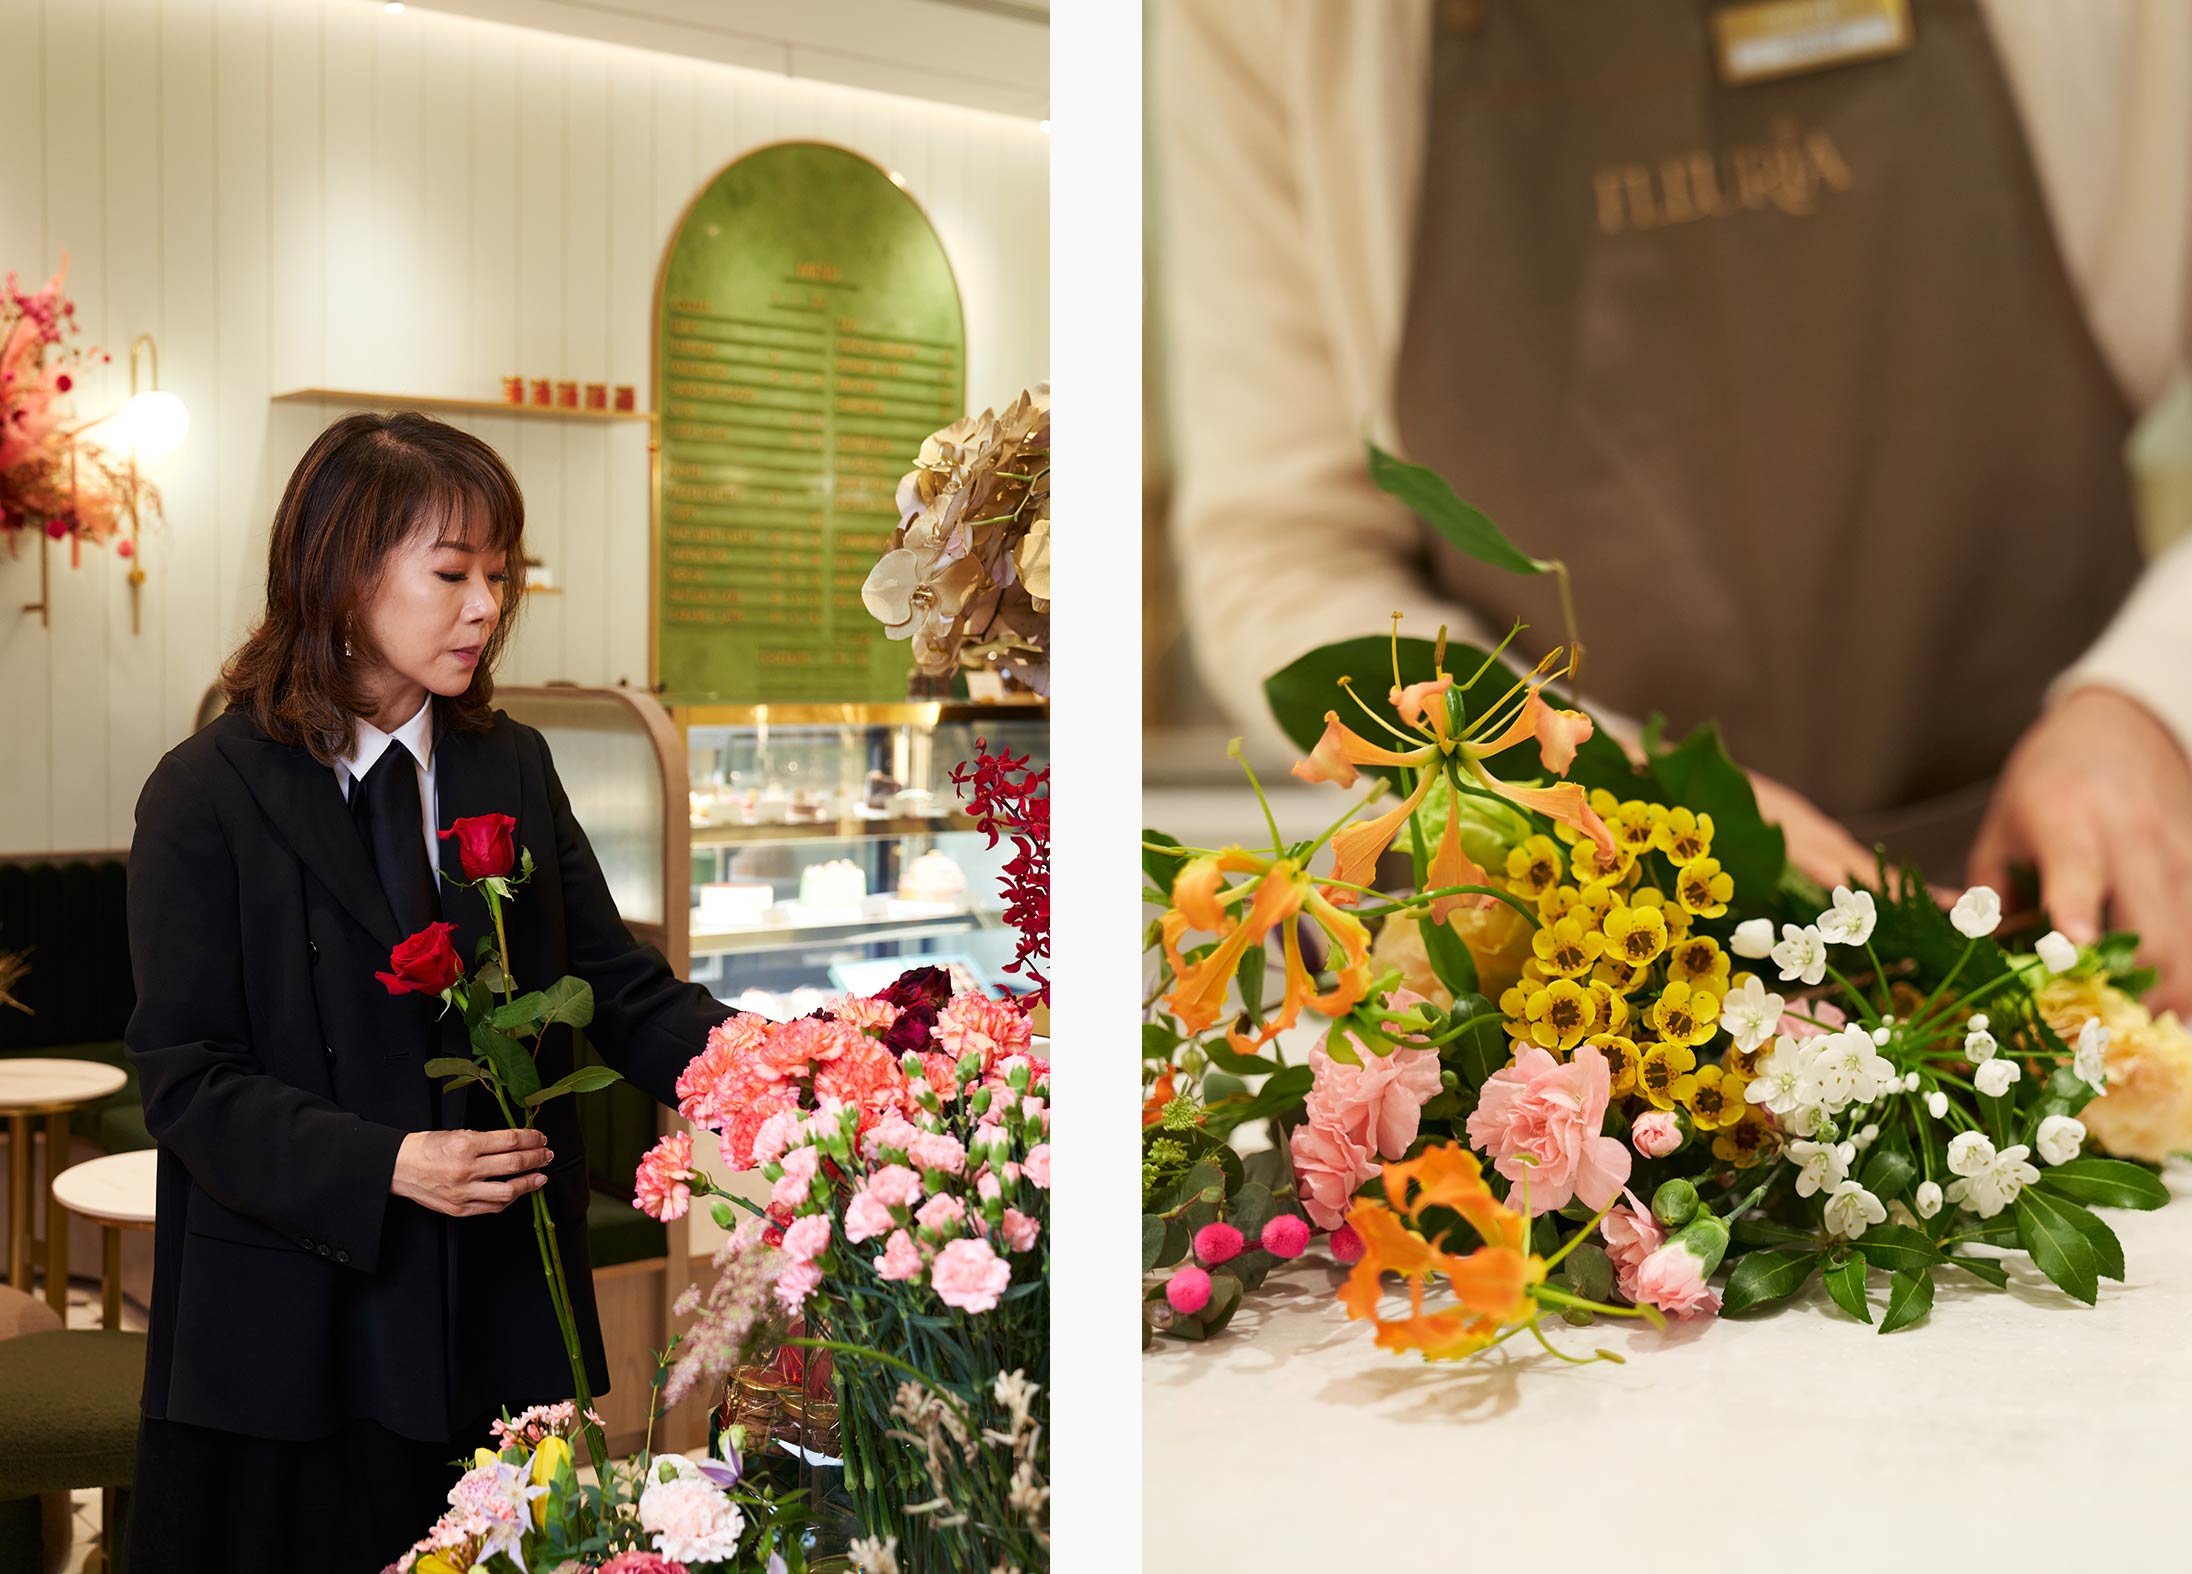 Serene Cheng arranges flowers at her florist-cafe Fleuria